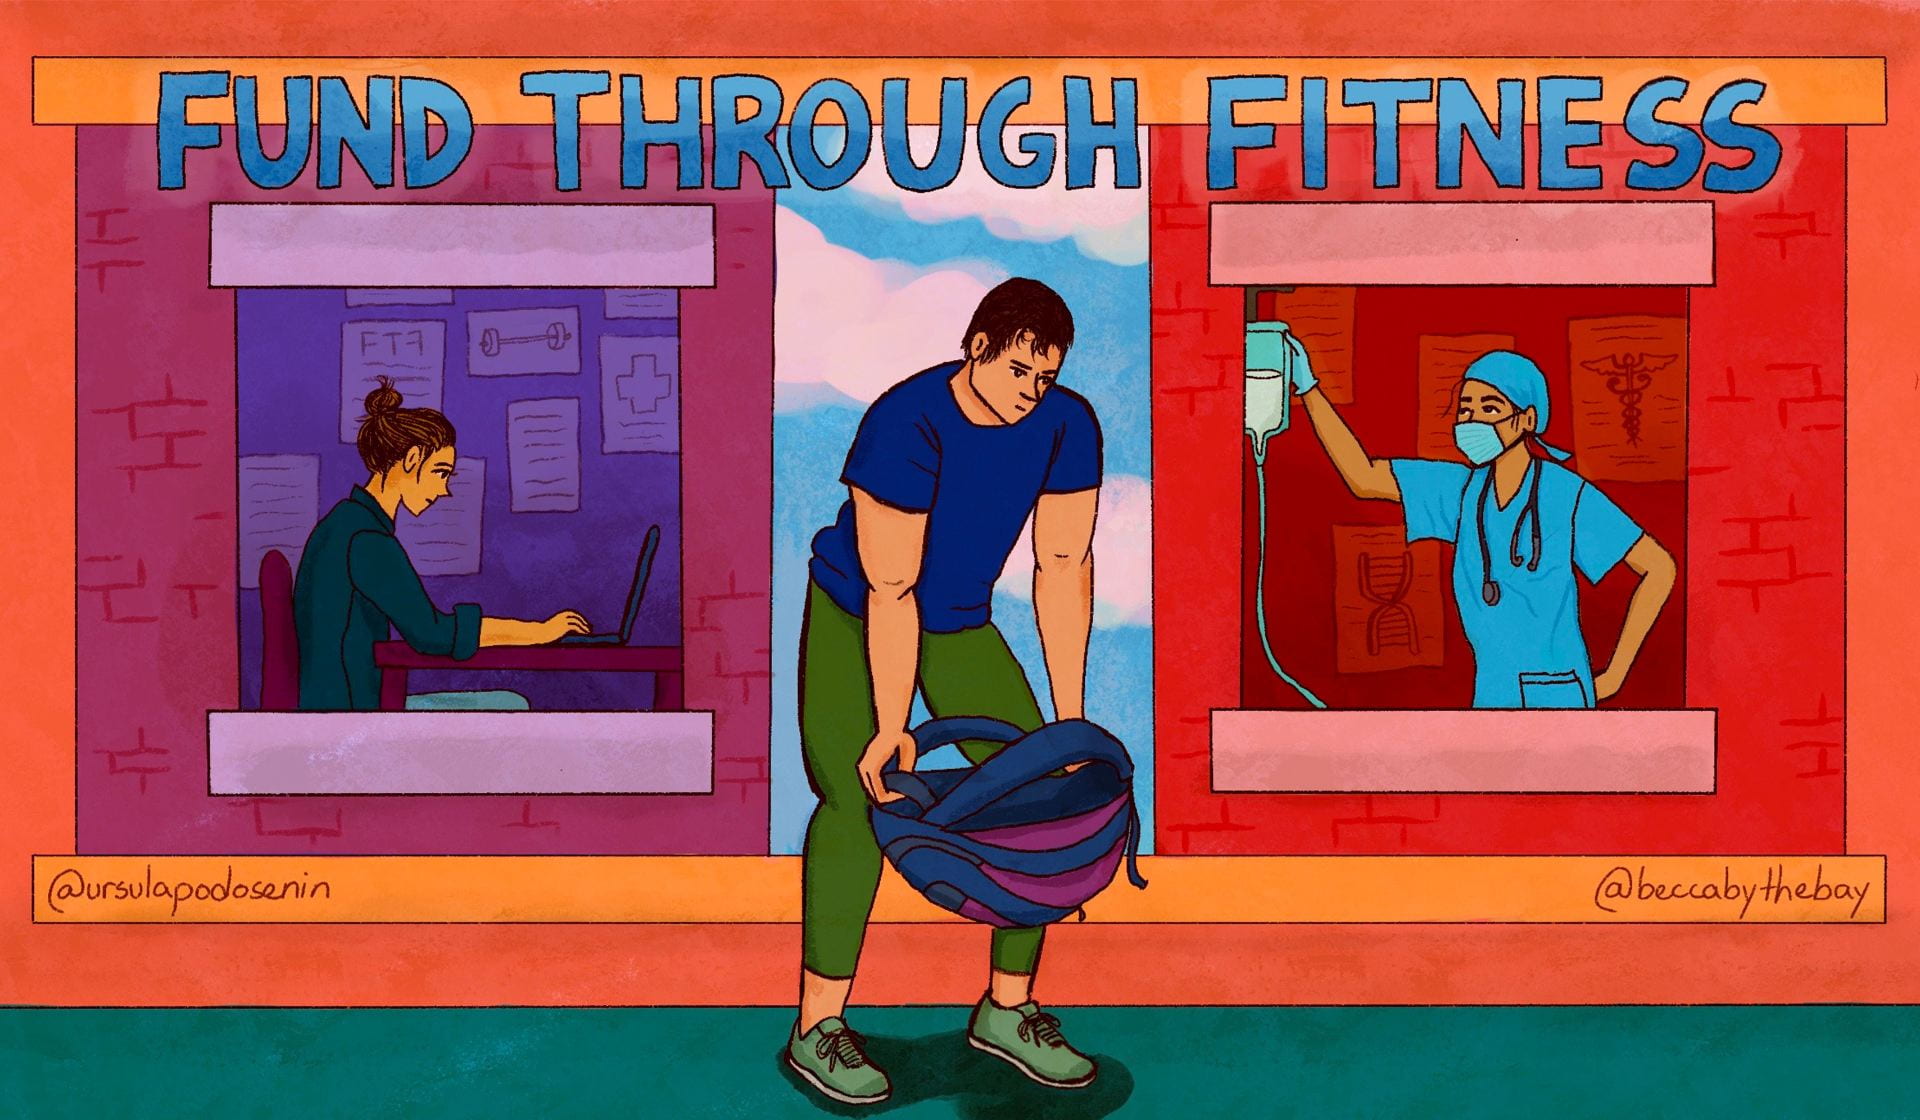 Fund Through Fitness